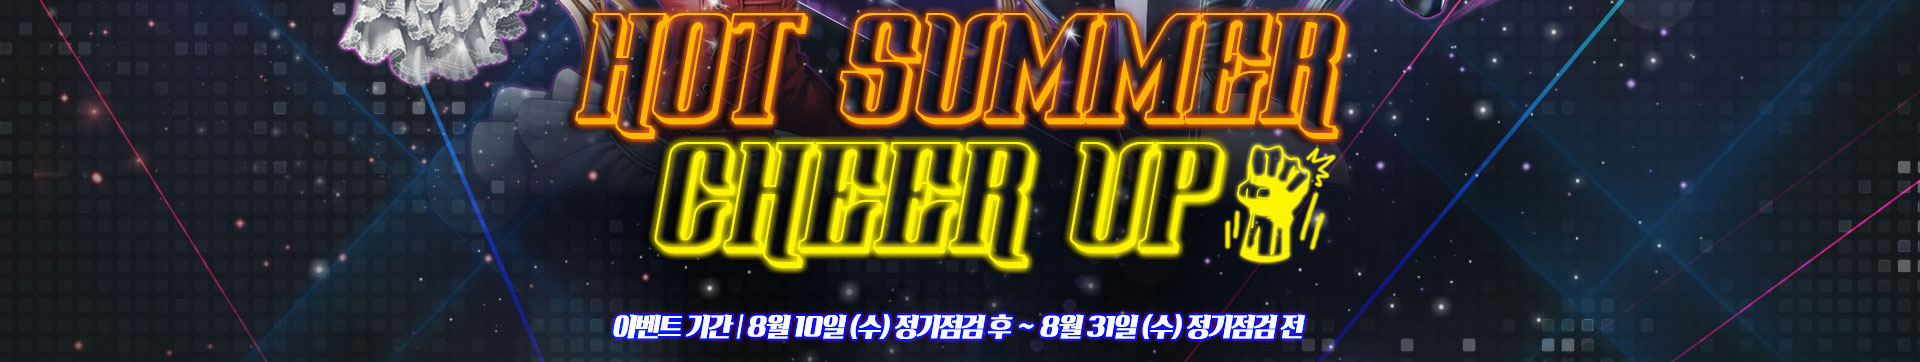 HOT SUMMER CHEER UP! 이벤트 기간 | 8월 10일(수) 정기정검 후 ~ 8월 31일 (수) 정기점검 전